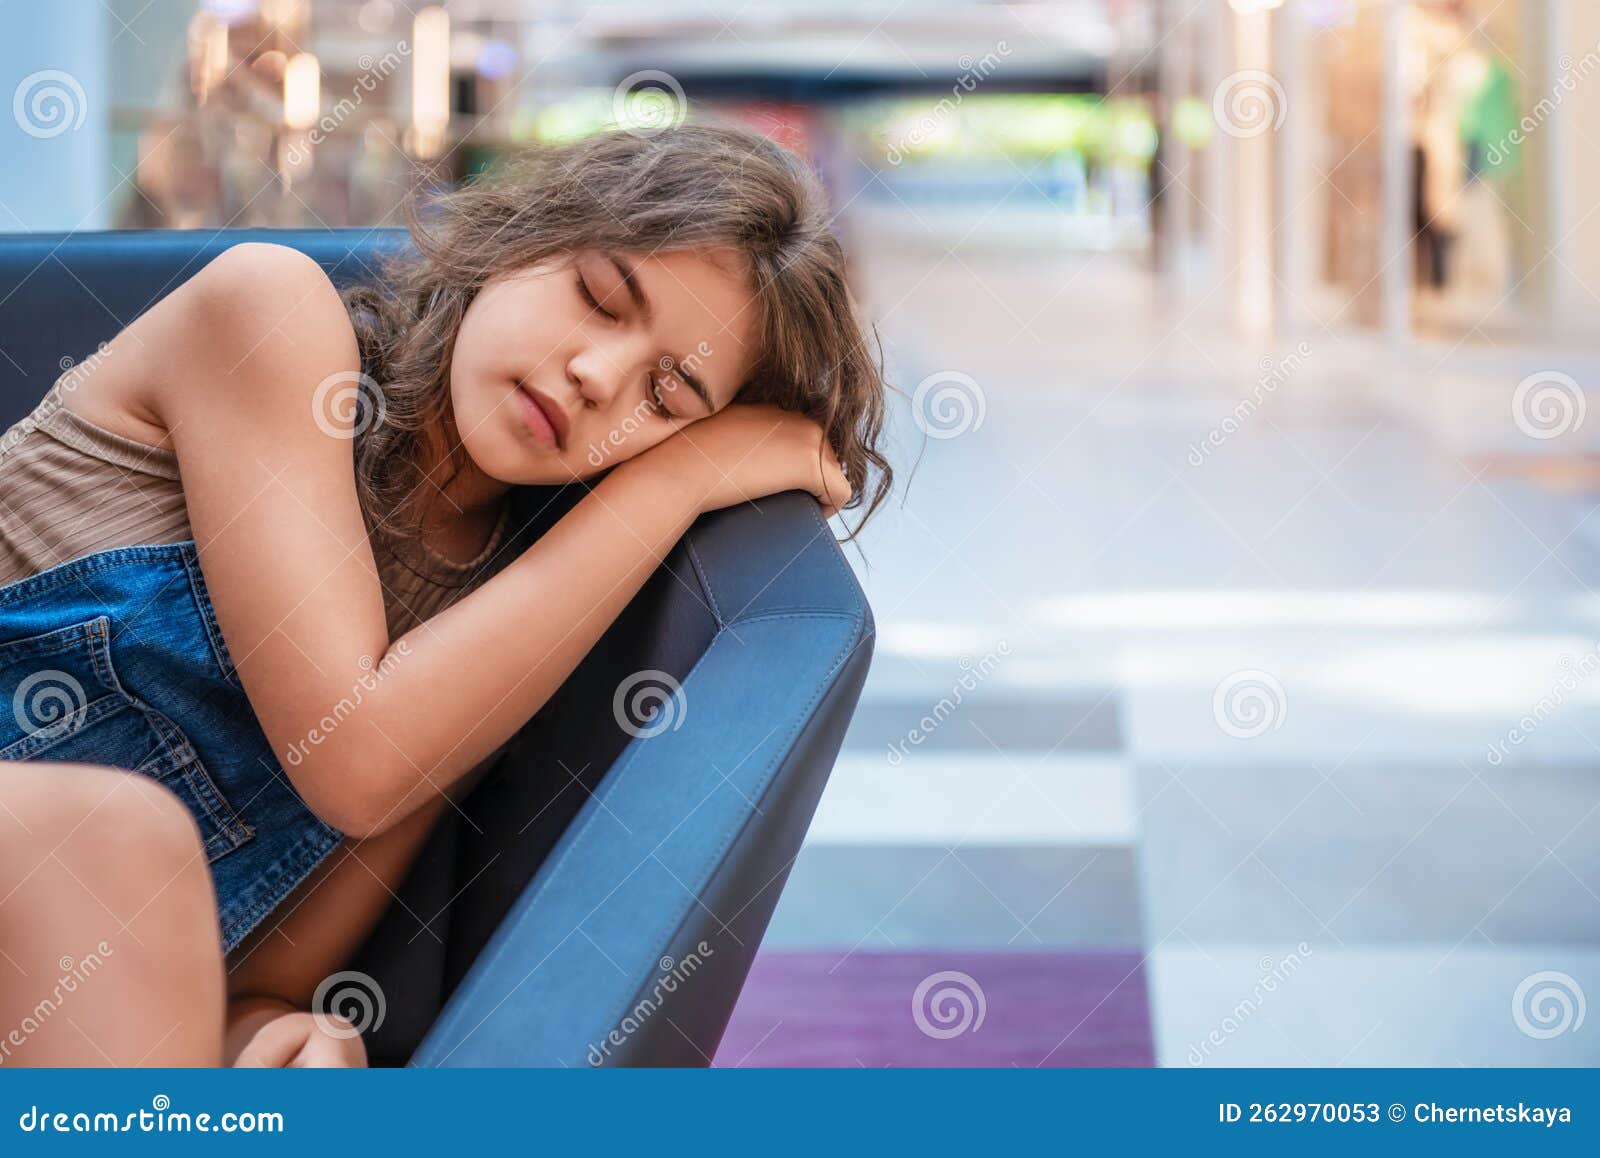 Tired Teenage Girl Sleeping On Sofa In Shopping Mall Stock Image